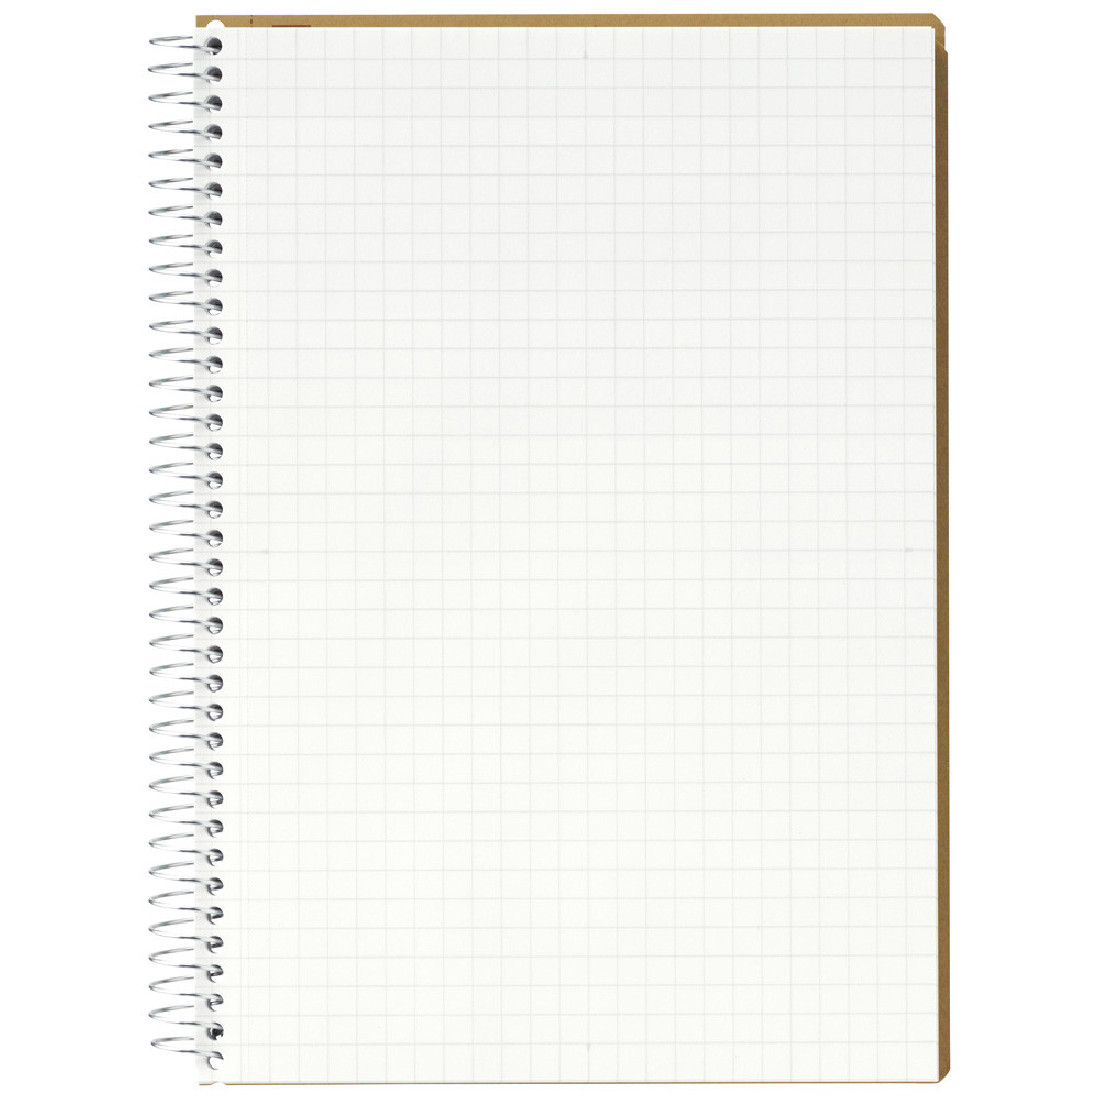 Maruman B6 spiral notebook squared paper 80 sheets N248ES